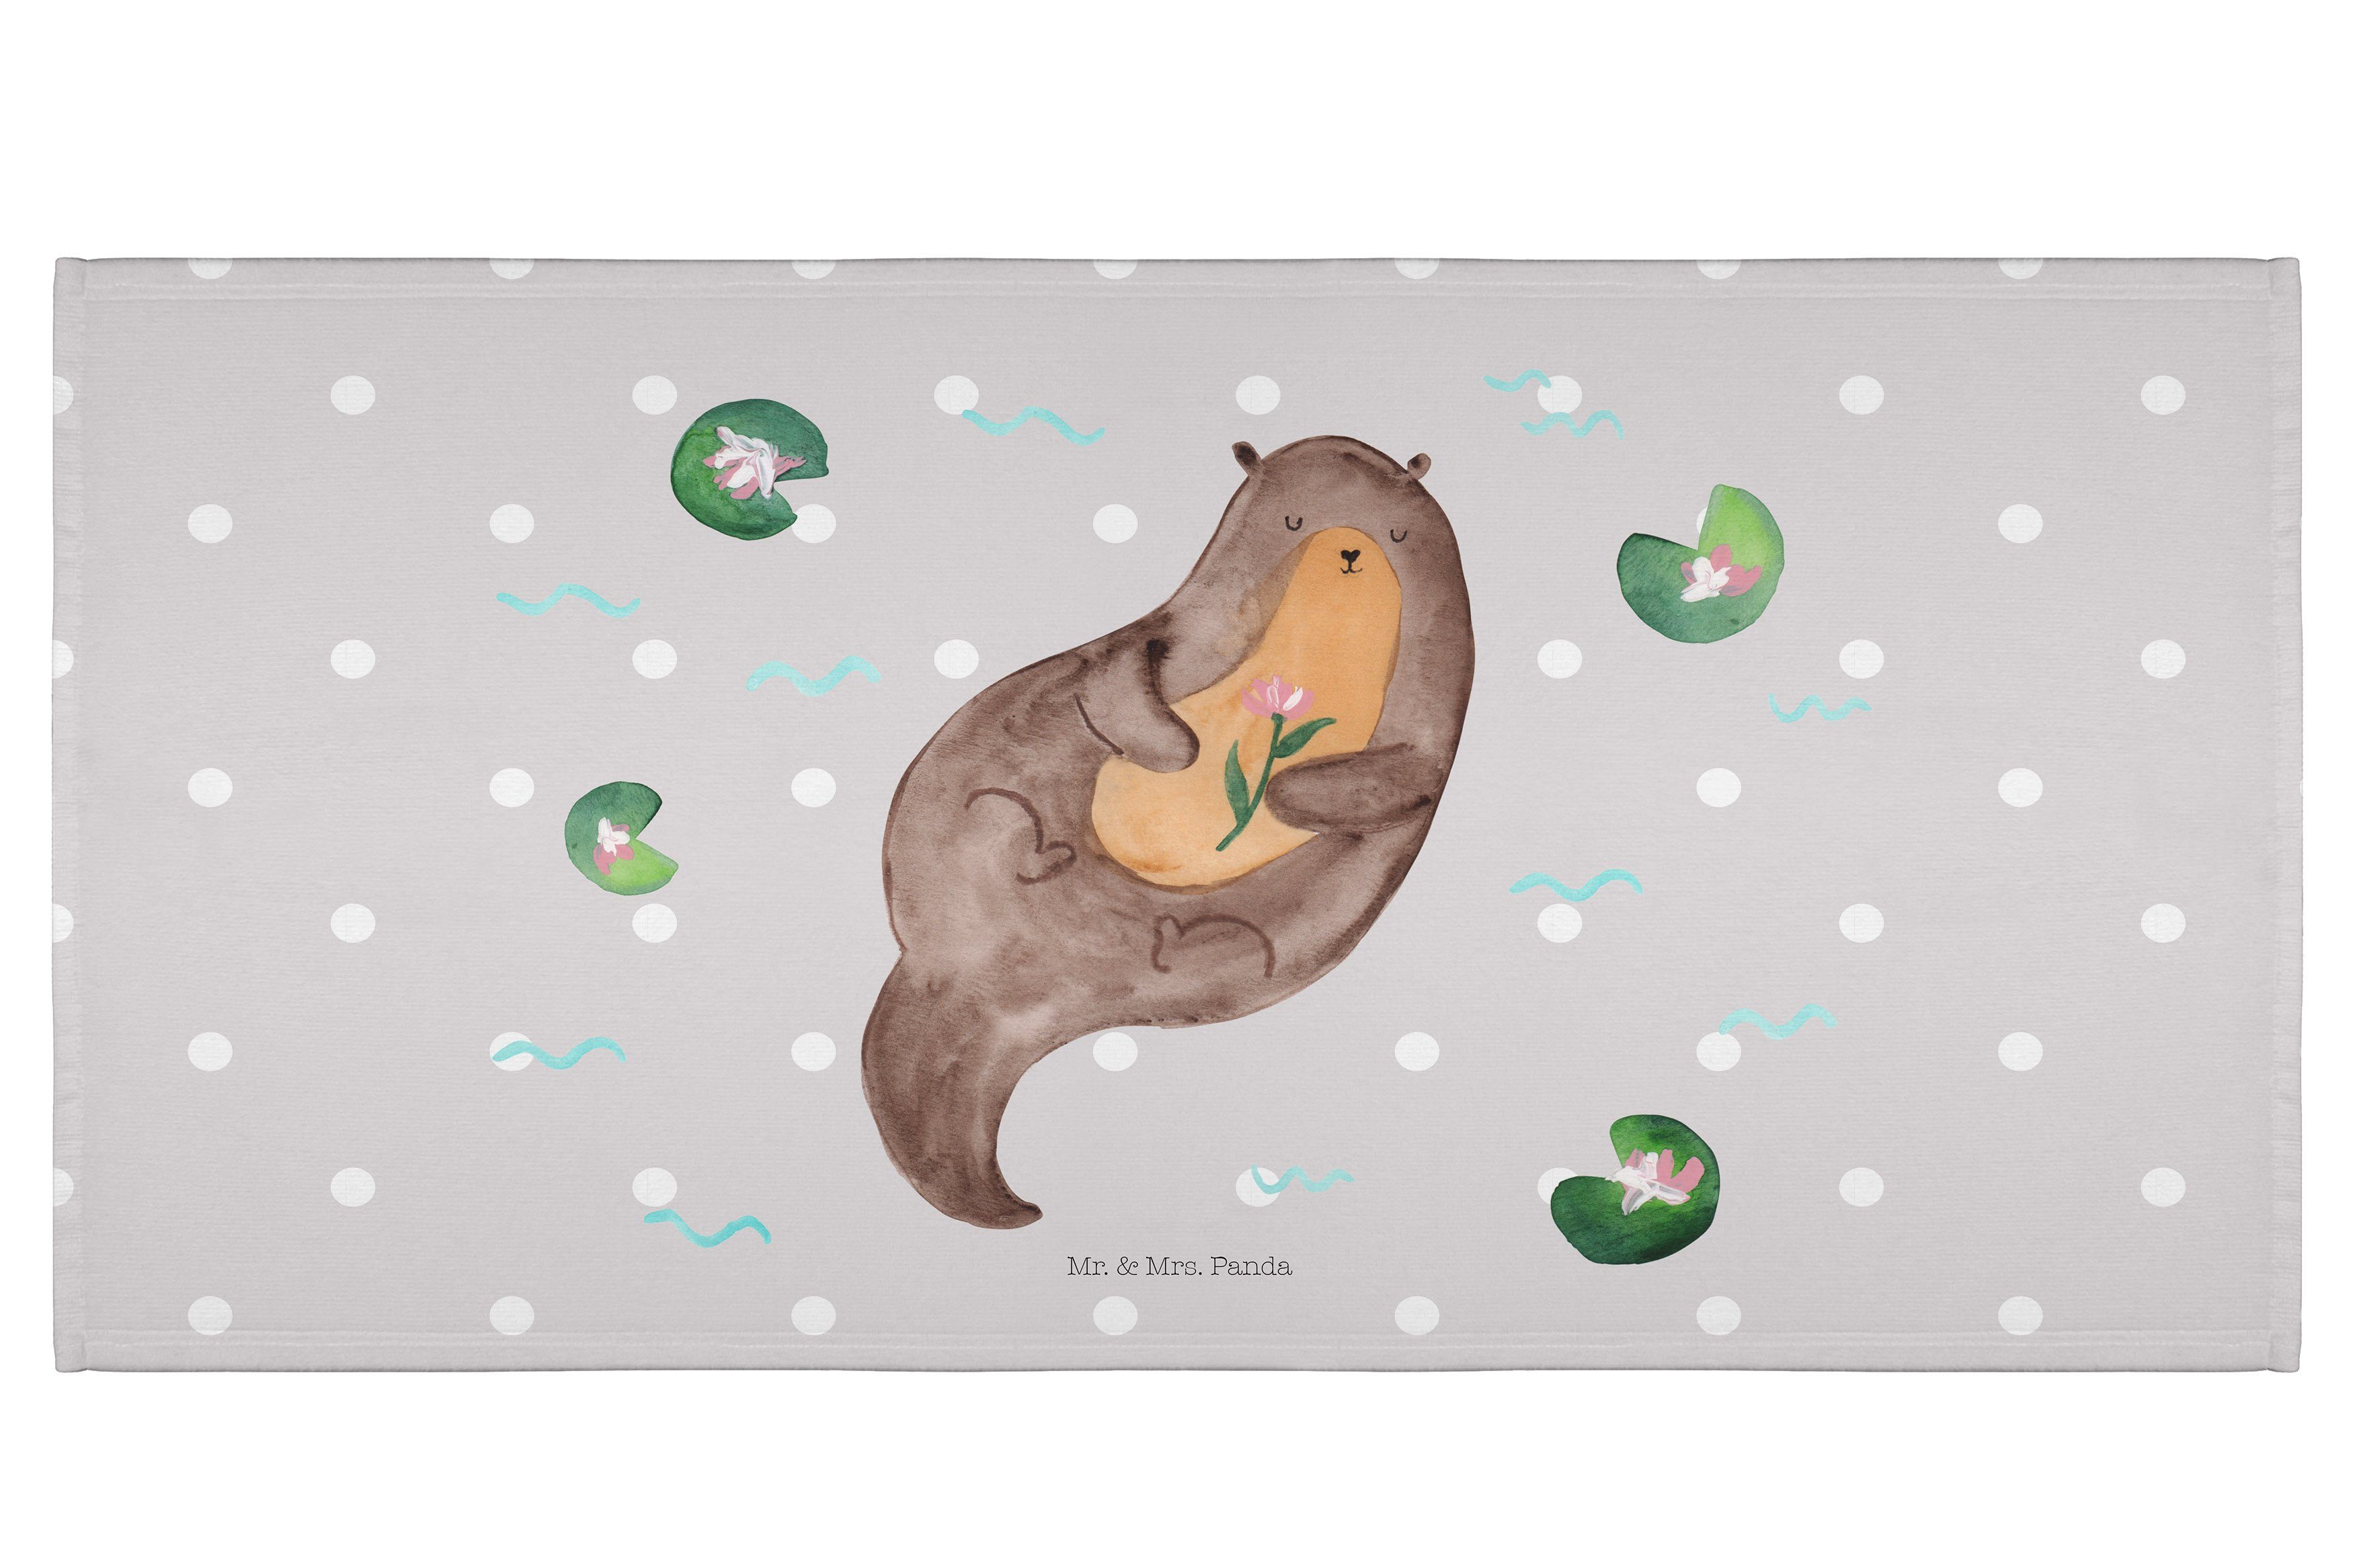 Mr. & Mrs. Panda Handtuch Otter mit Seerose - Grau Pastell - Geschenk, groß, Fischotter, Badezi, (1-St)